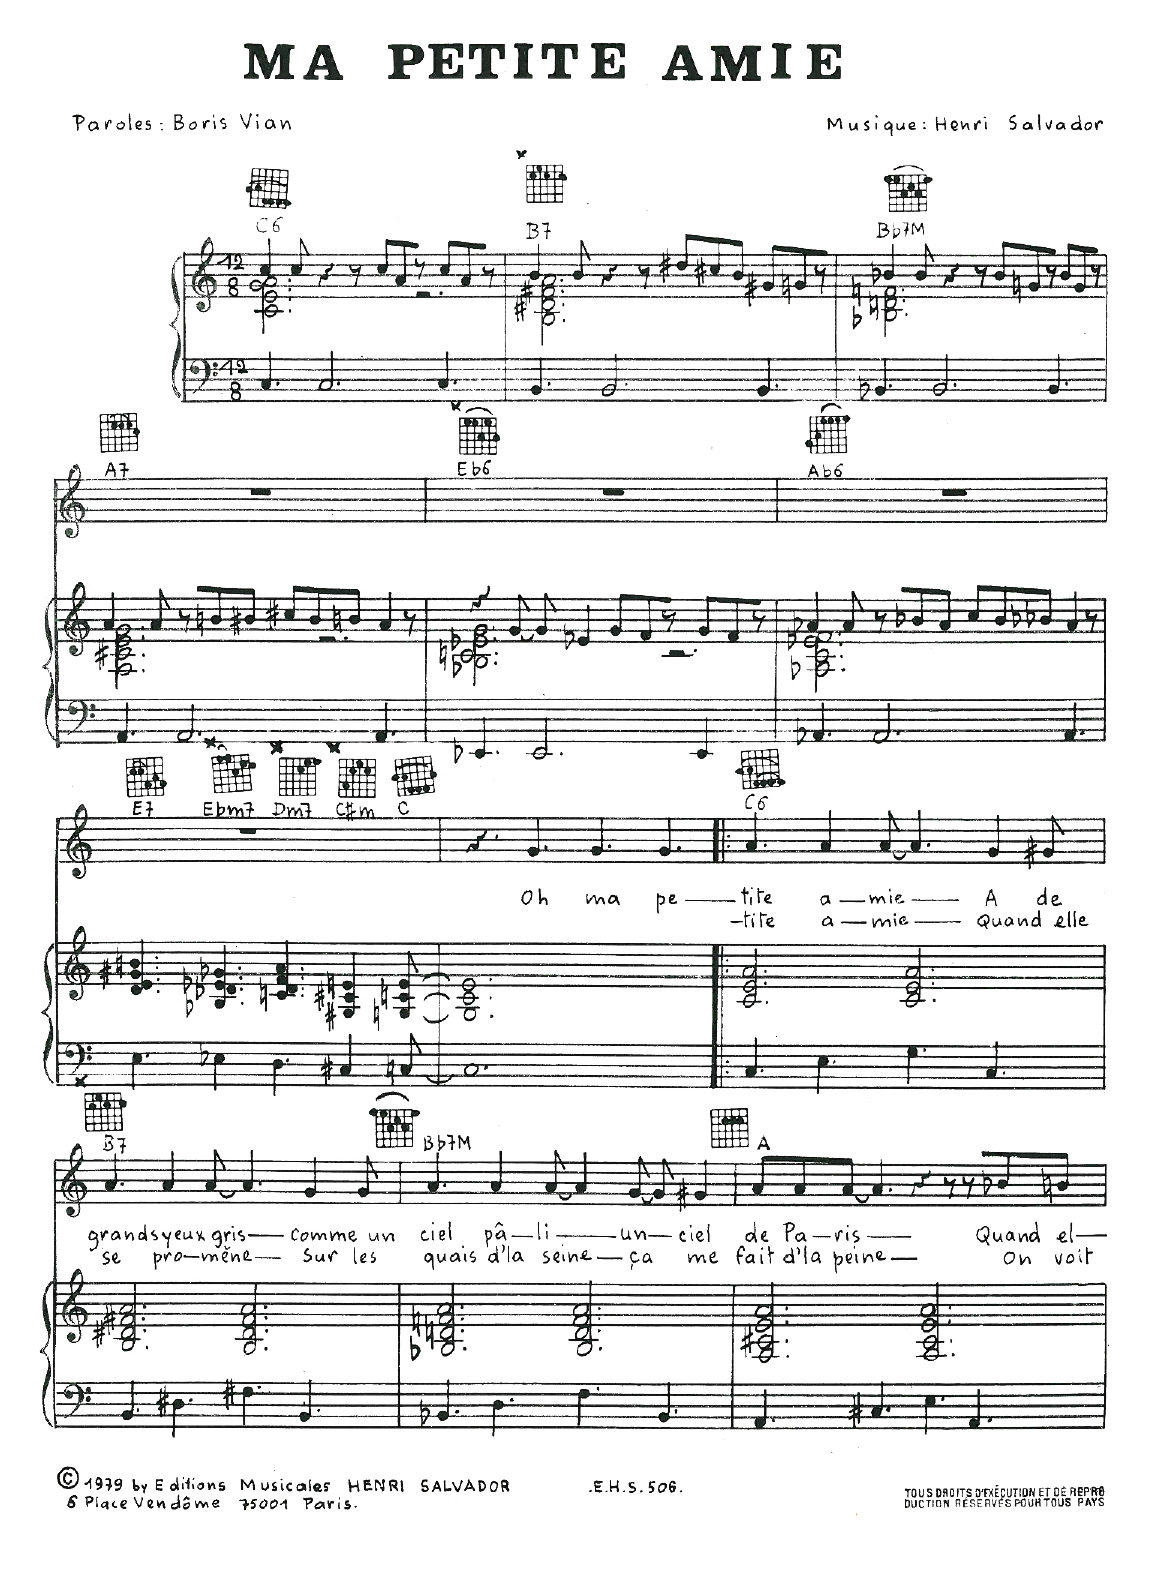 Henri Salvador Ma Petite Amie Sheet Music Notes & Chords for Piano, Vocal & Guitar - Download or Print PDF